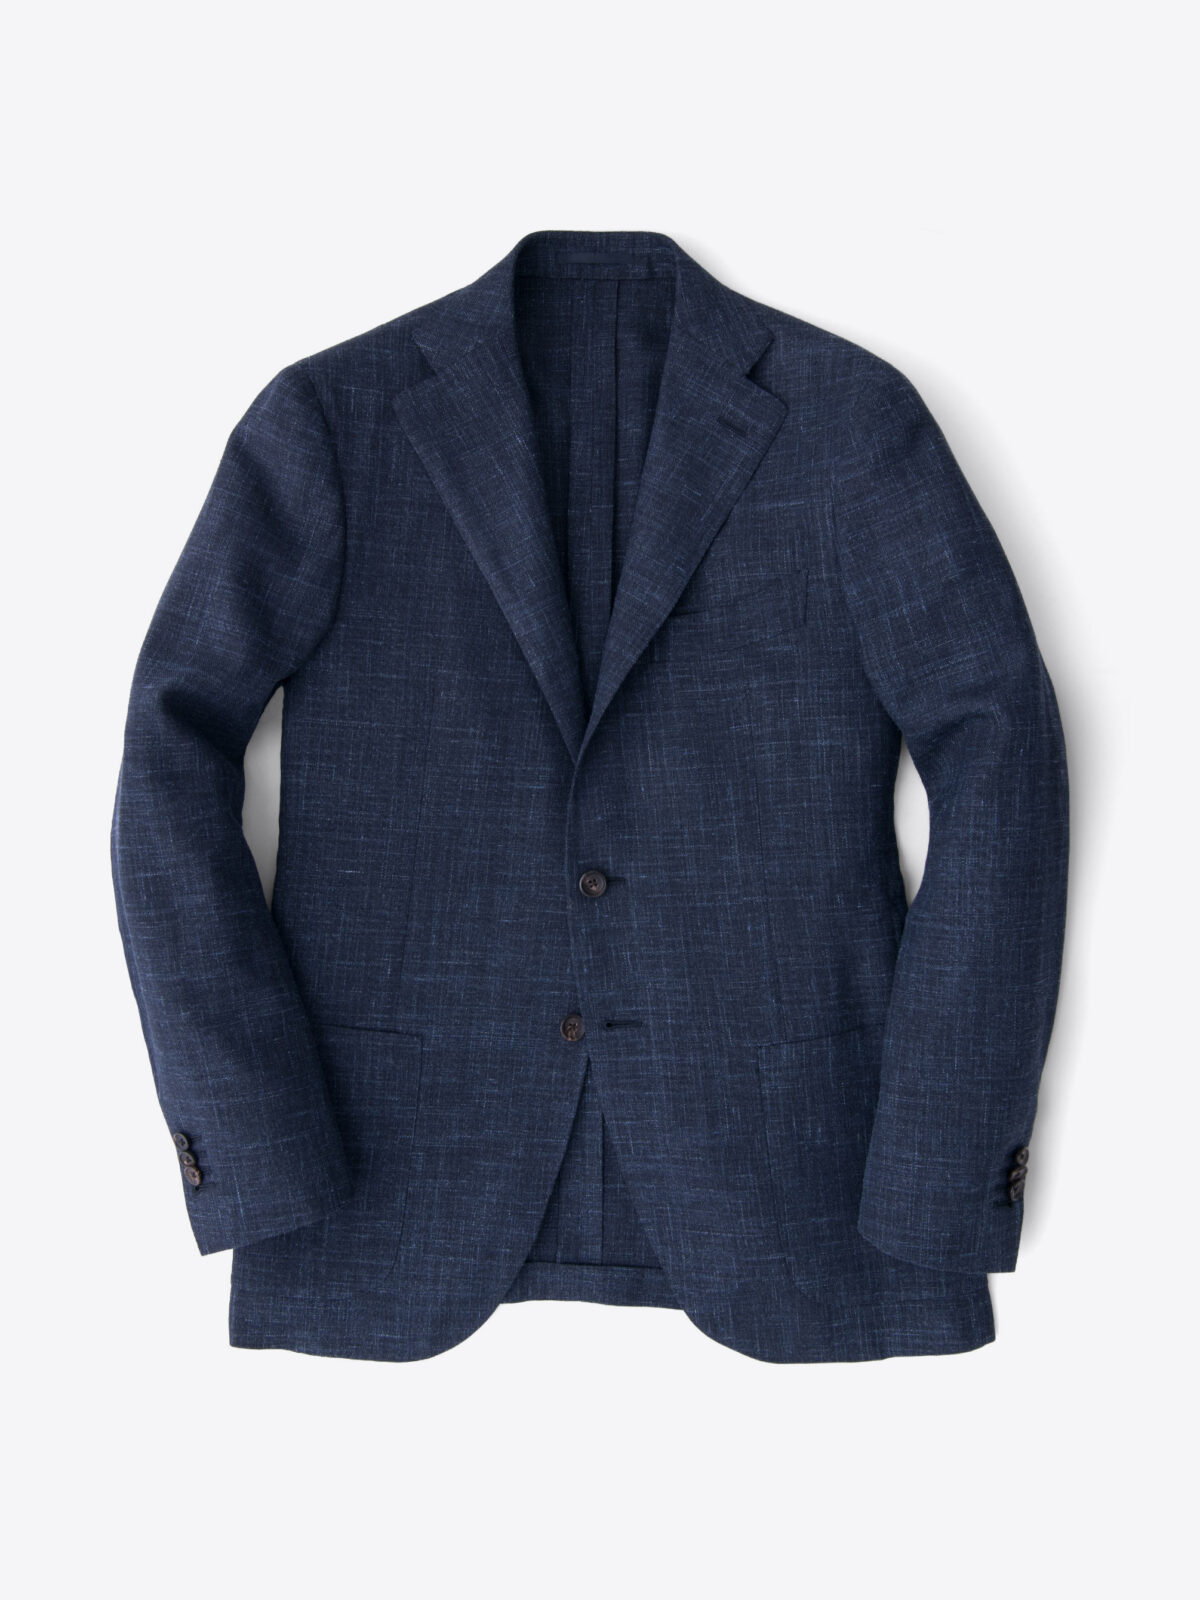 Hudson Navy Slub Weave Jacket by Proper Cloth